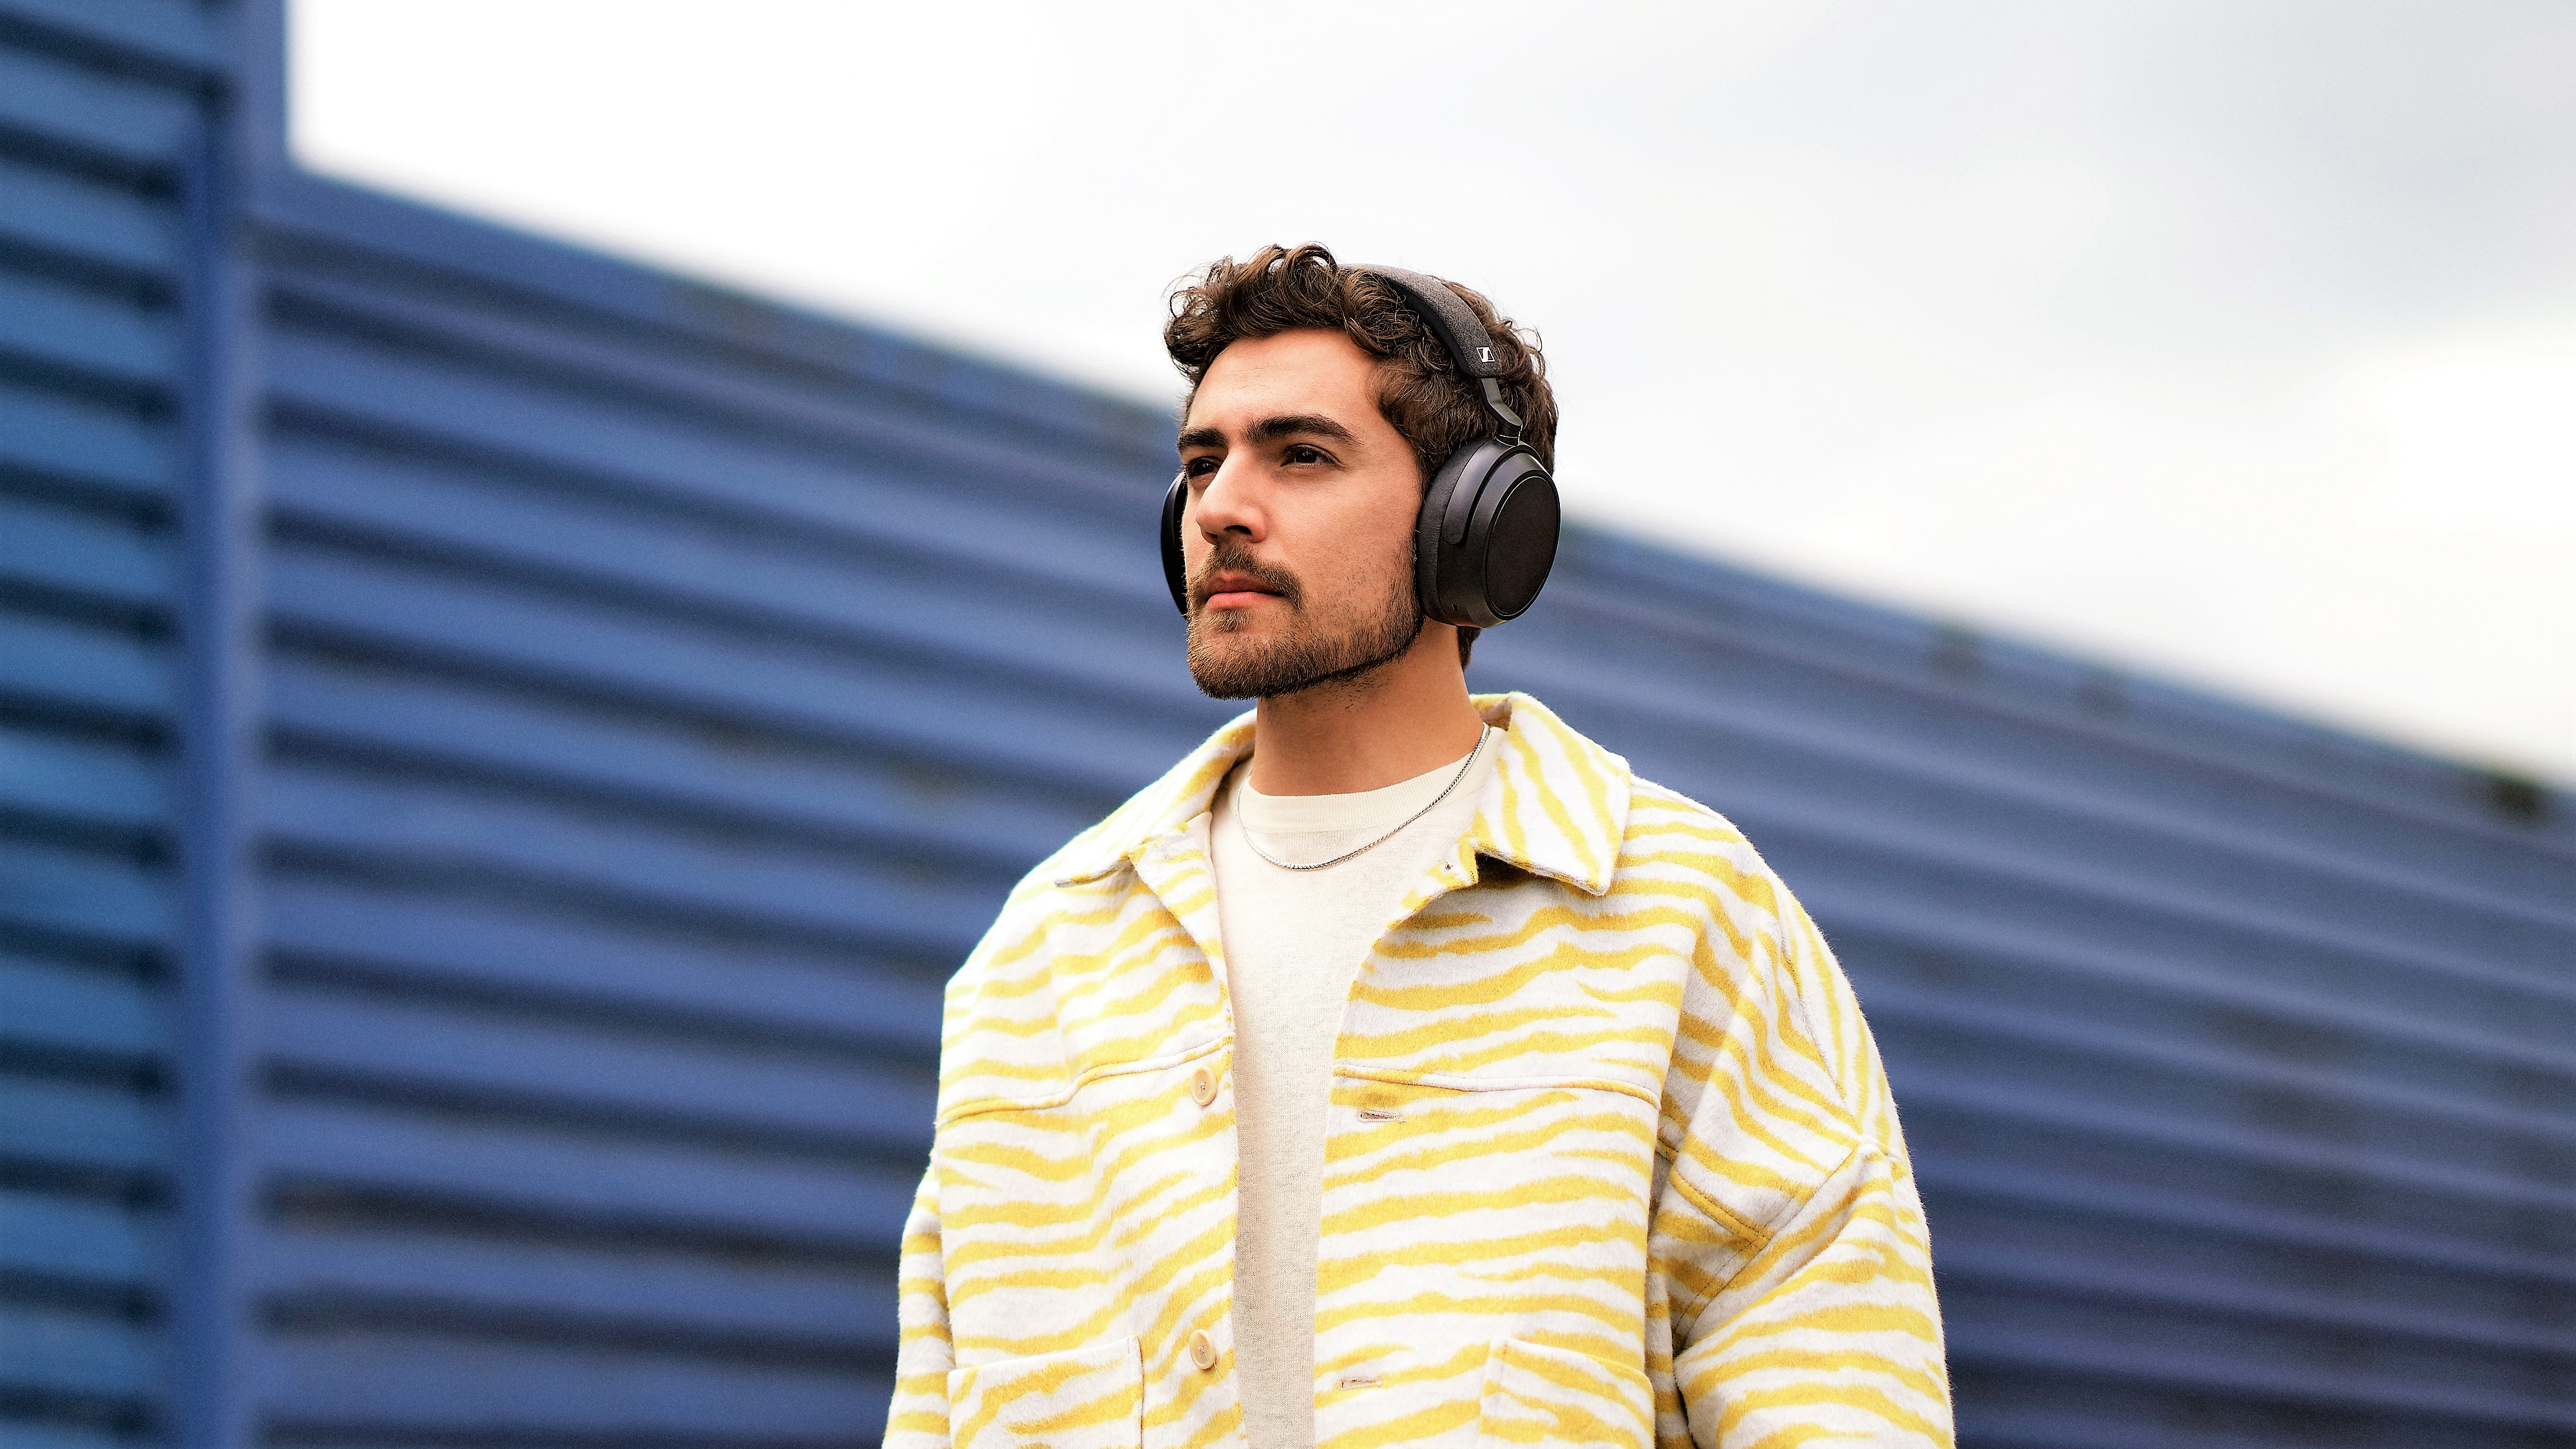 Sennheiser PR shot of man wearing Momentum 4 Wireless headphones outdoors